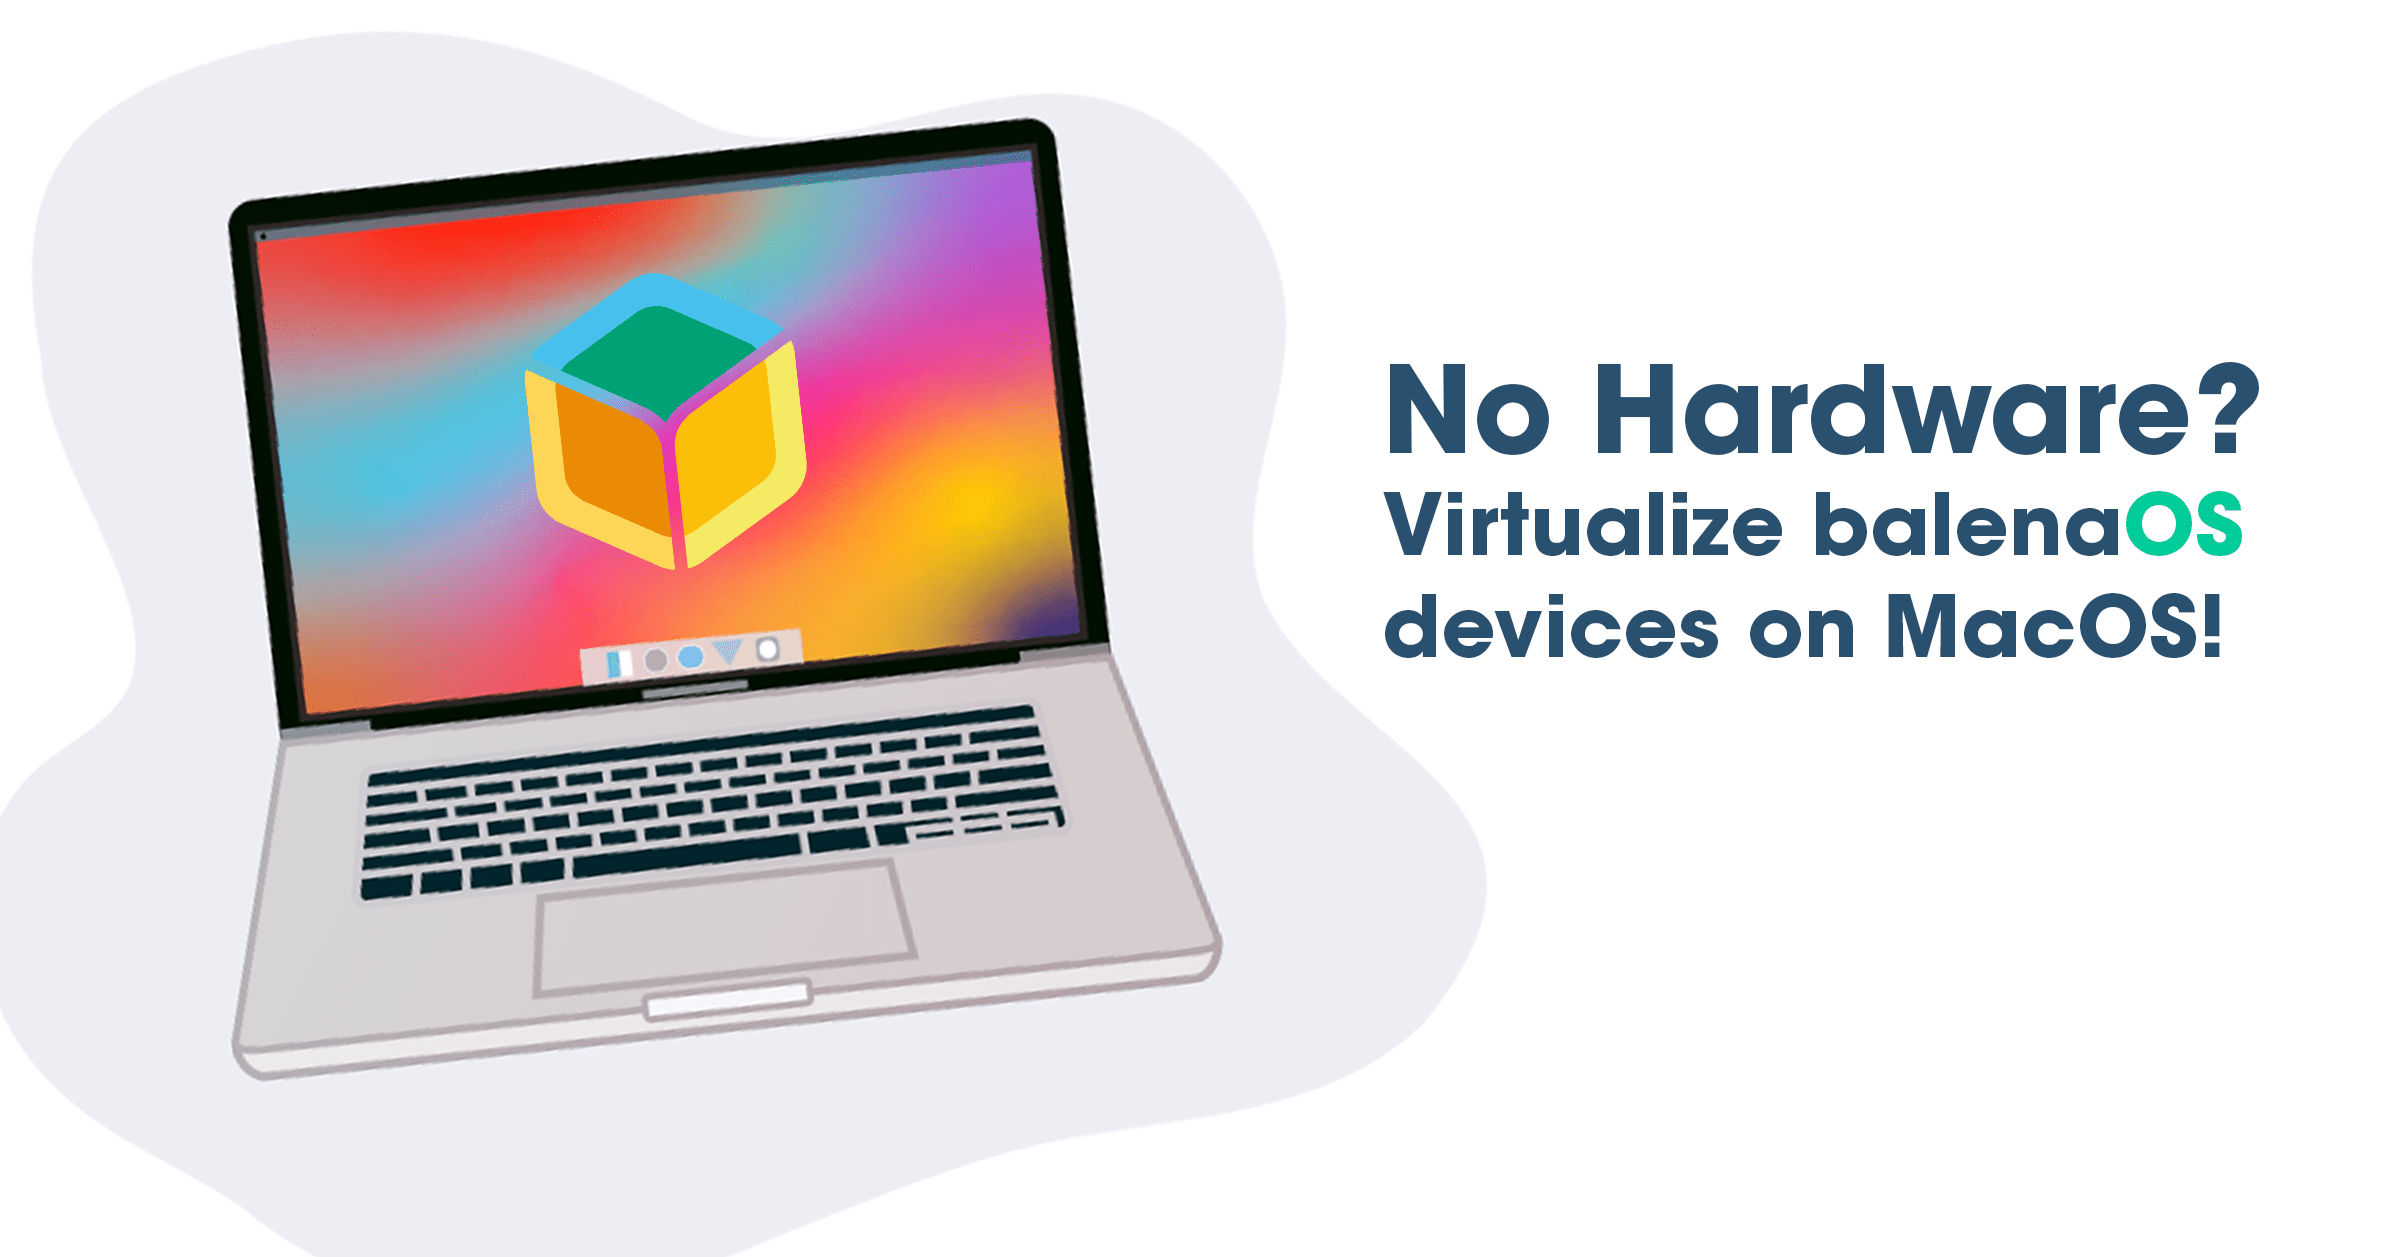 No Hardware? Virtualize balenaOS devices on MacOS!